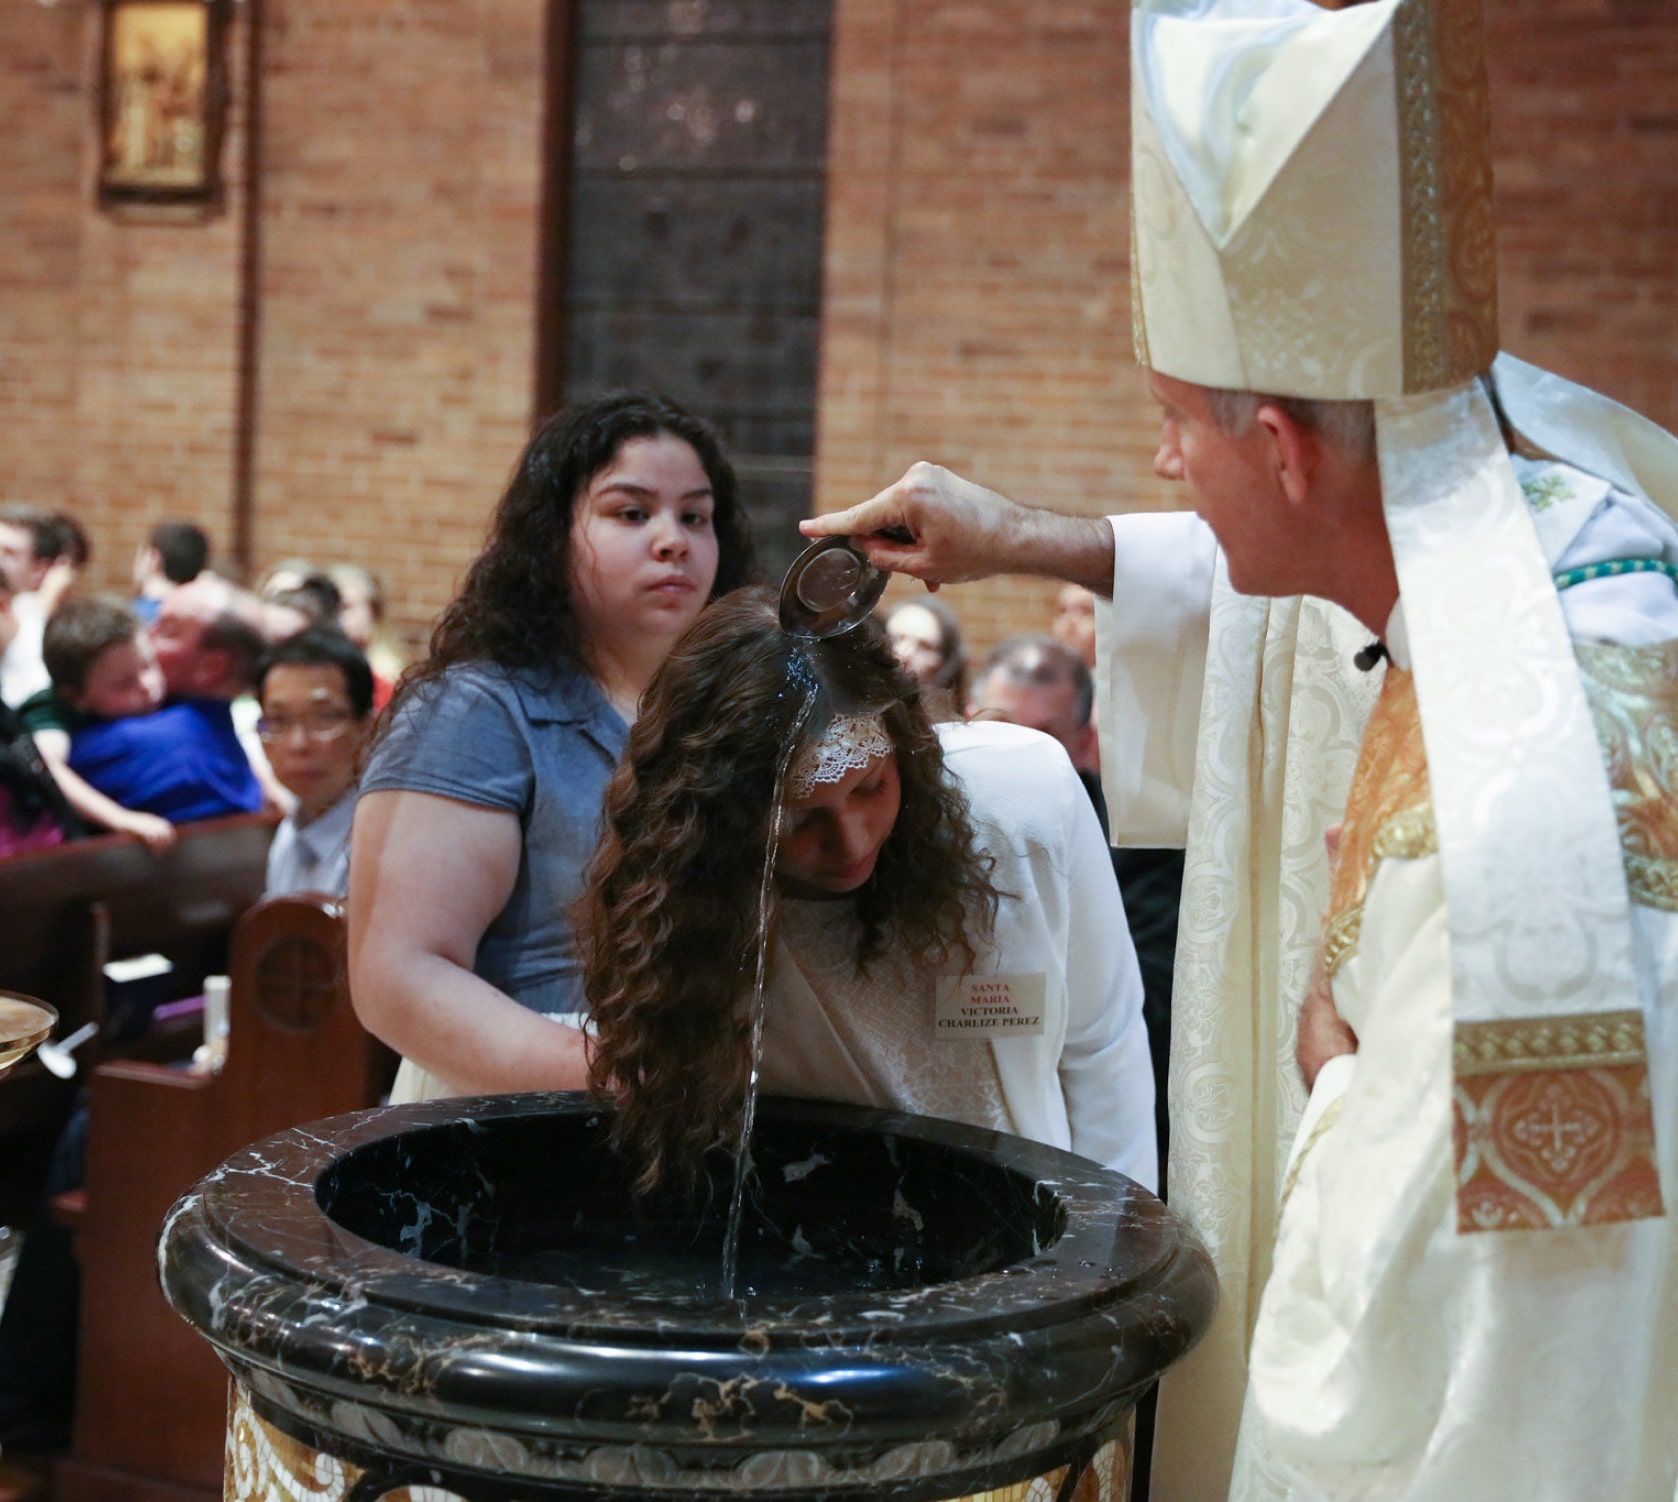 Bishop Strickland baptizing a young girl